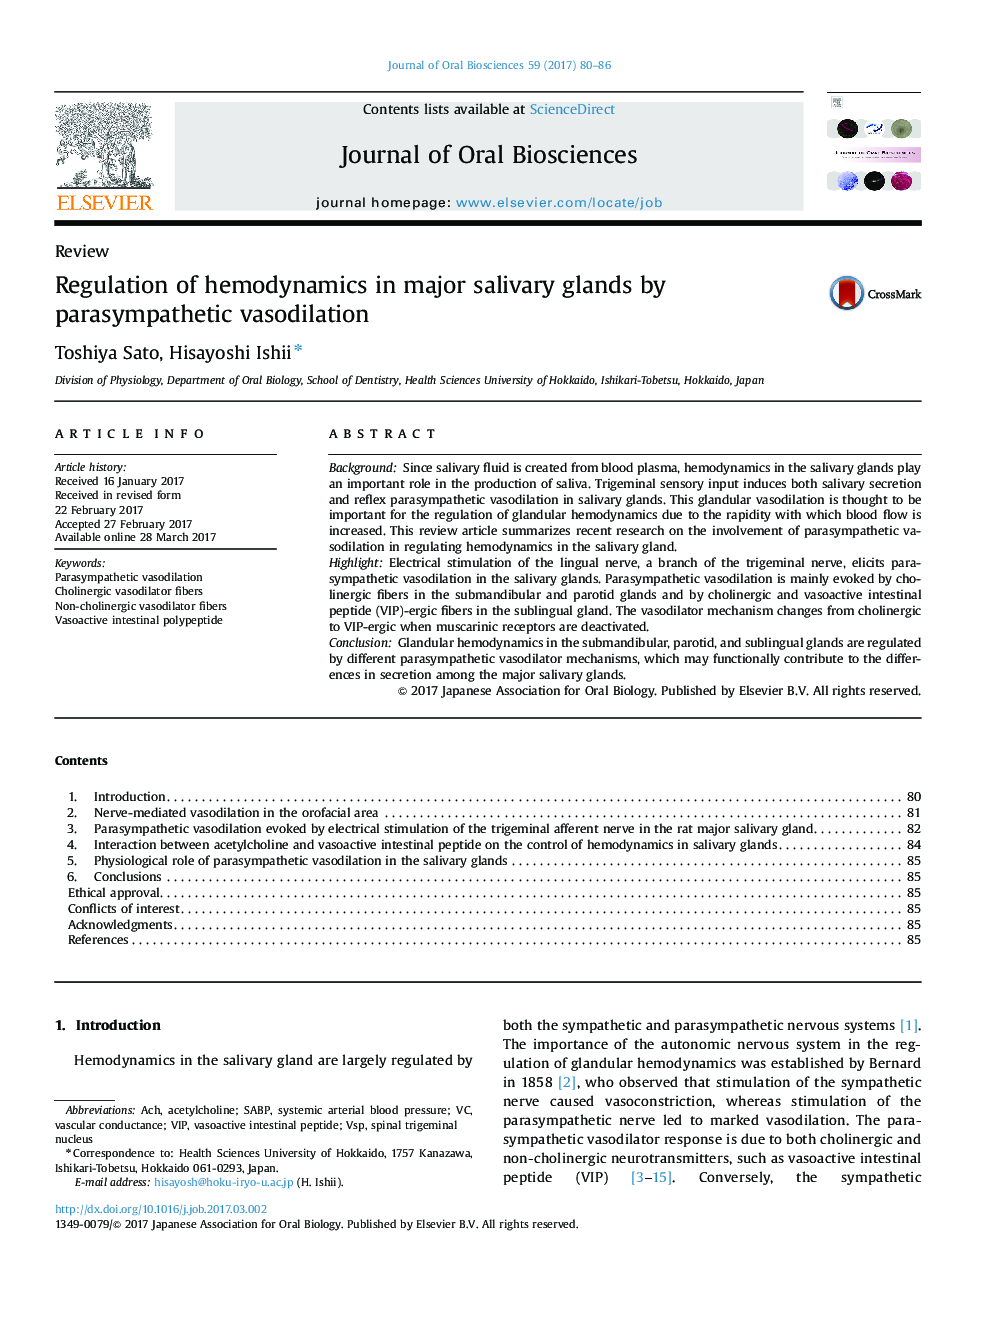 Regulation of hemodynamics in major salivary glands by parasympathetic vasodilation